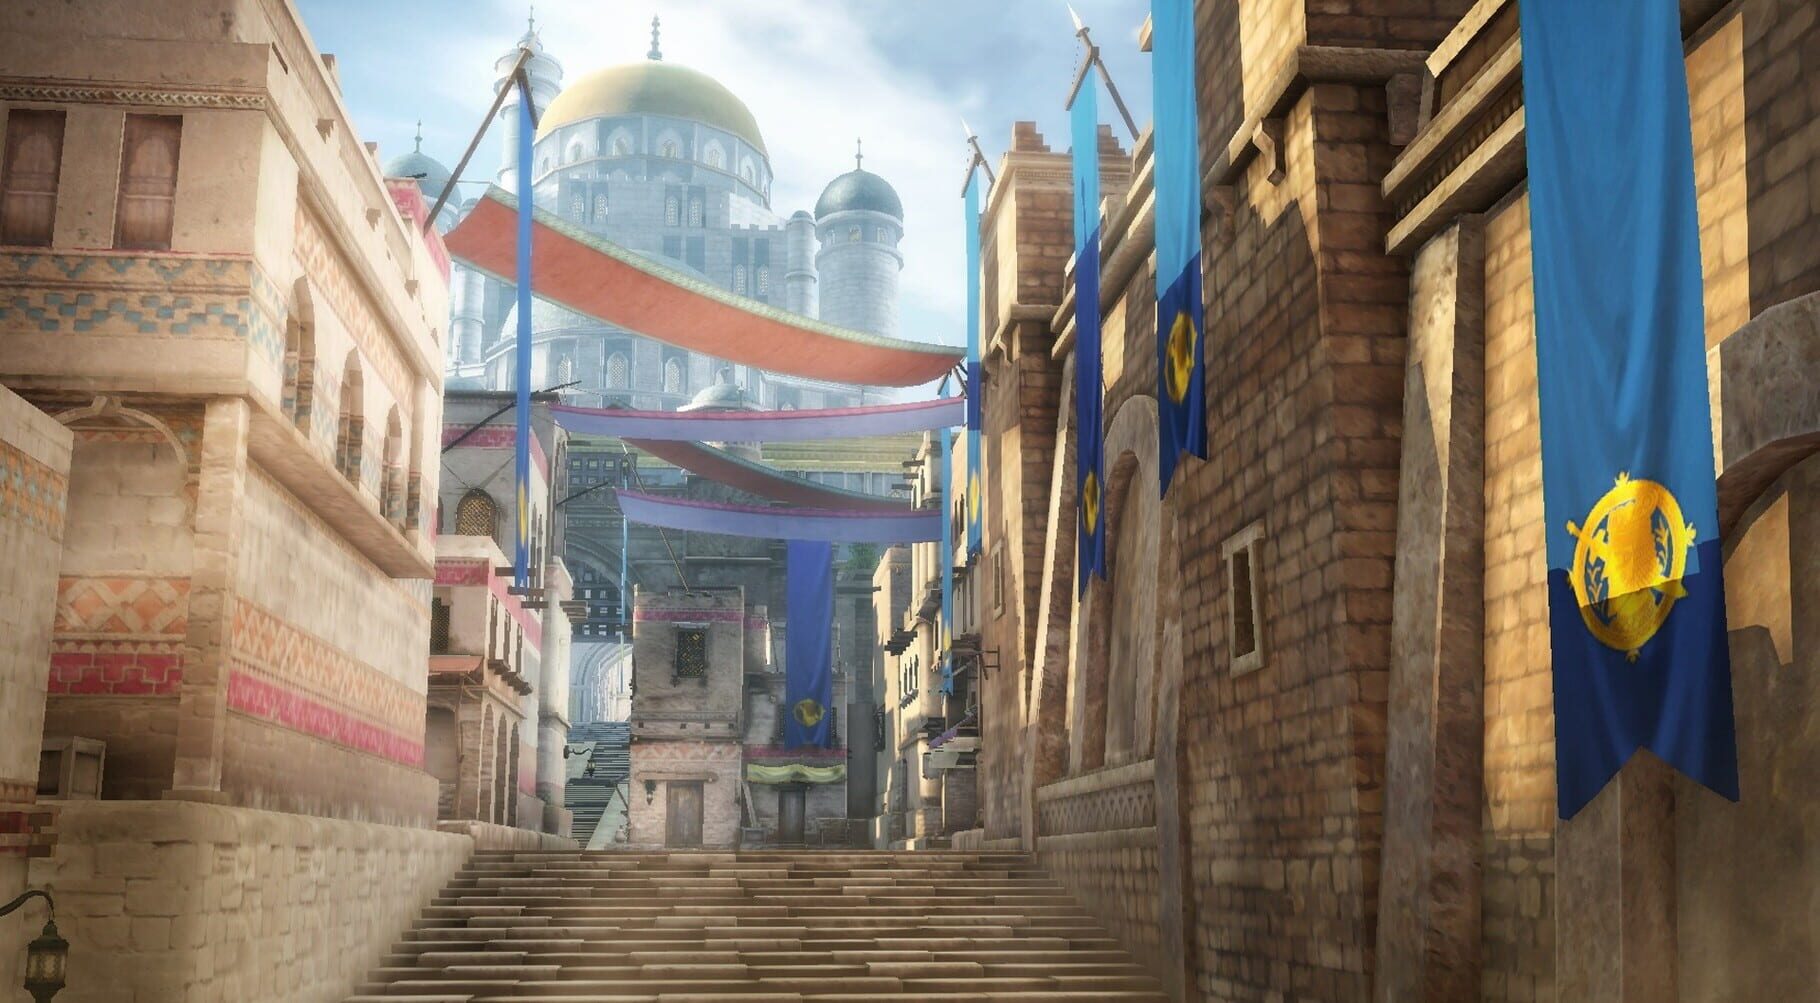 Screenshot for Arslan: The Warriors of Legend